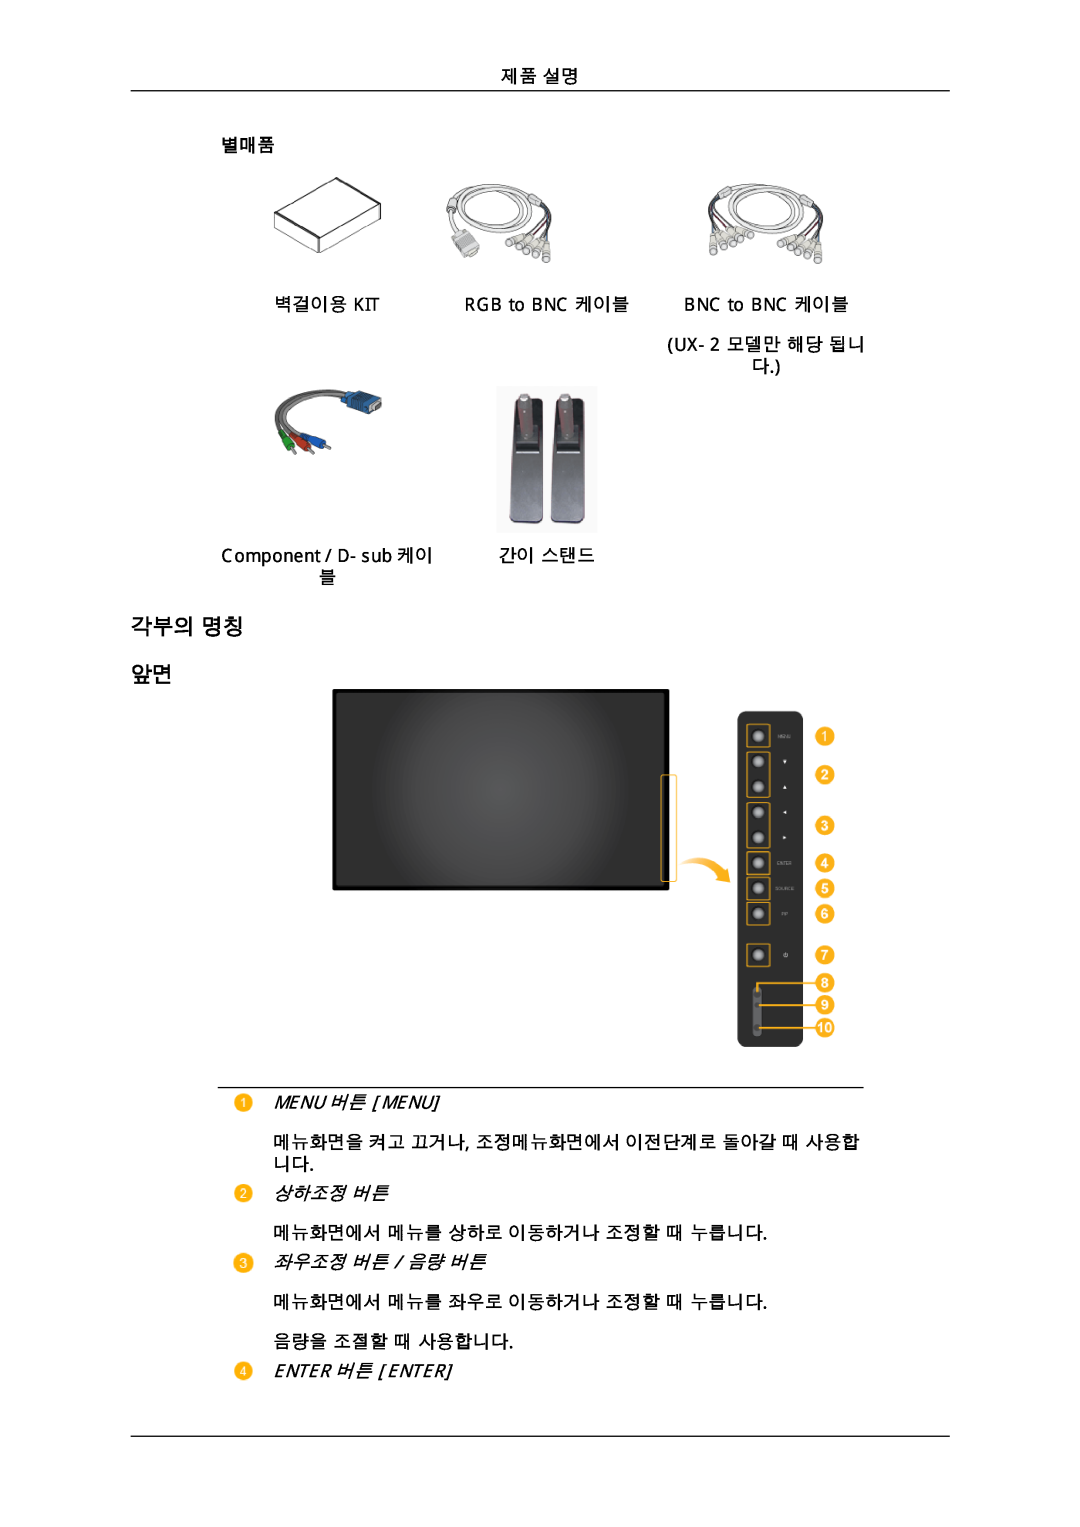 Samsung 725D quick start 각부의 명칭 앞면, RGB to BNC 케이블, BNC to BNC 케이블, Component / D-sub 케이, Menu 버튼 Menu, 상하조정 버튼 